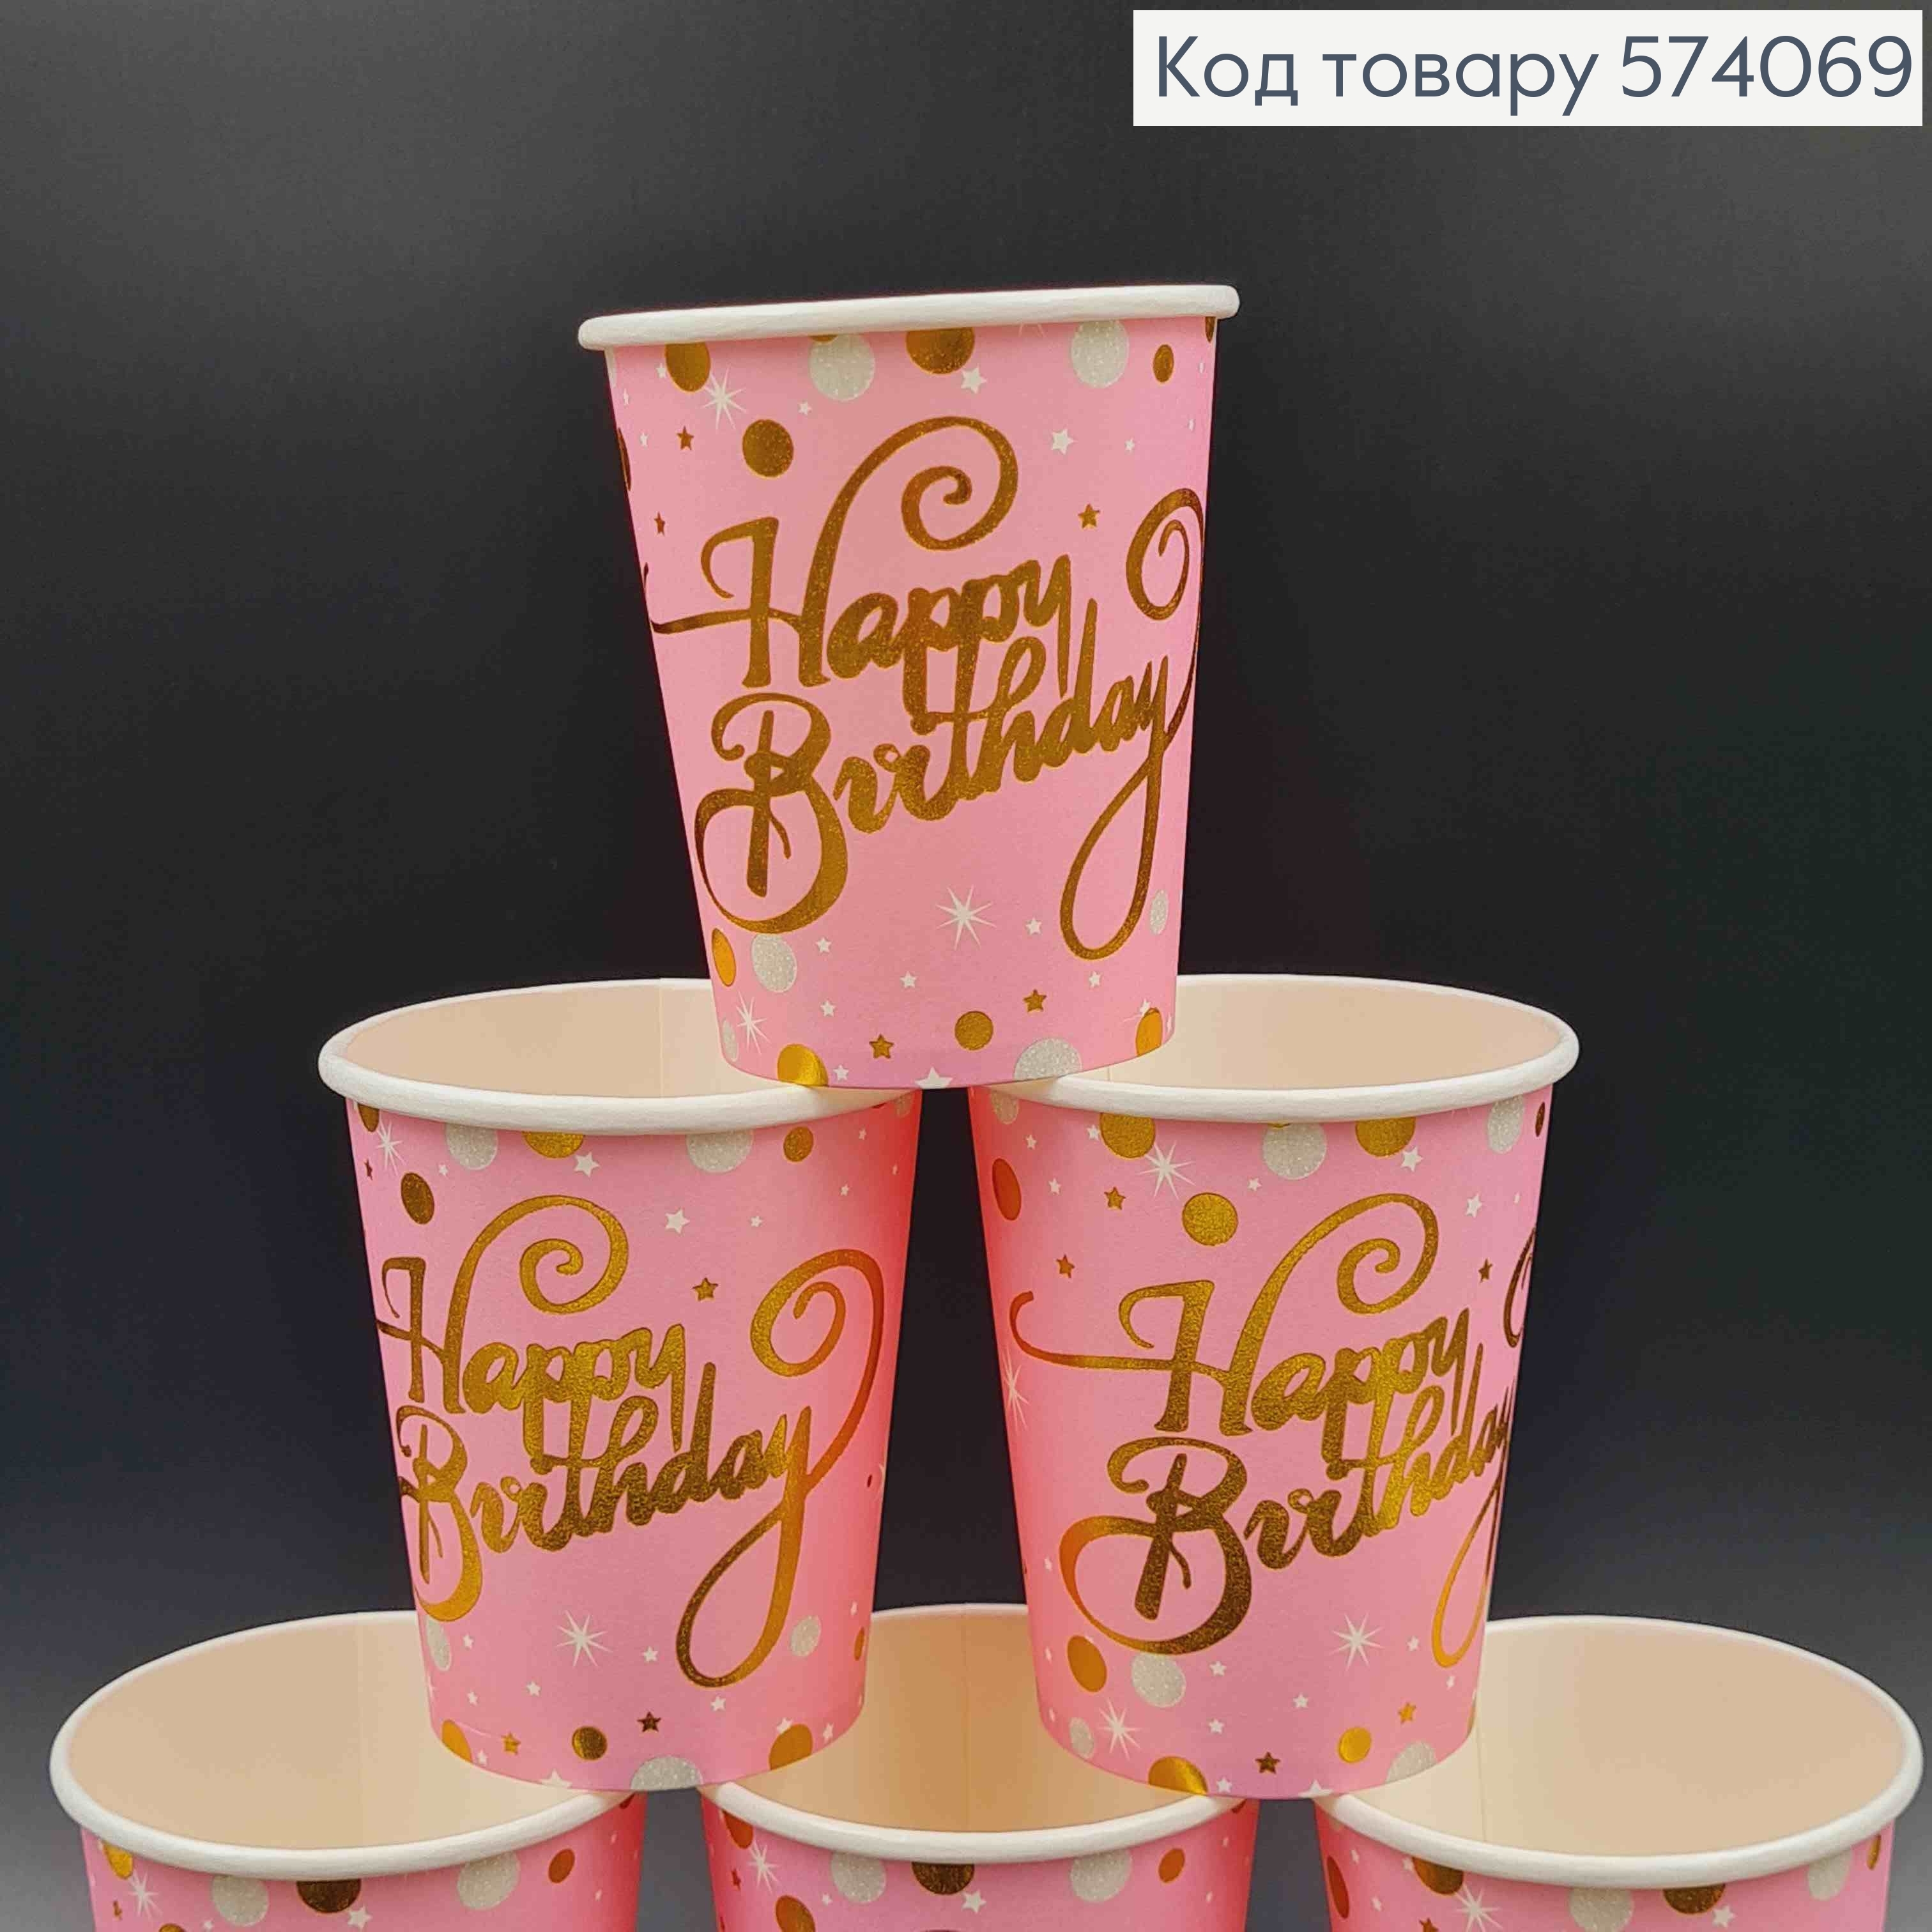 Набір стаканчиків паперових, "Happy Birthday" рожевого кольору в золотий горошок, 10шт/уп 574069 фото 2